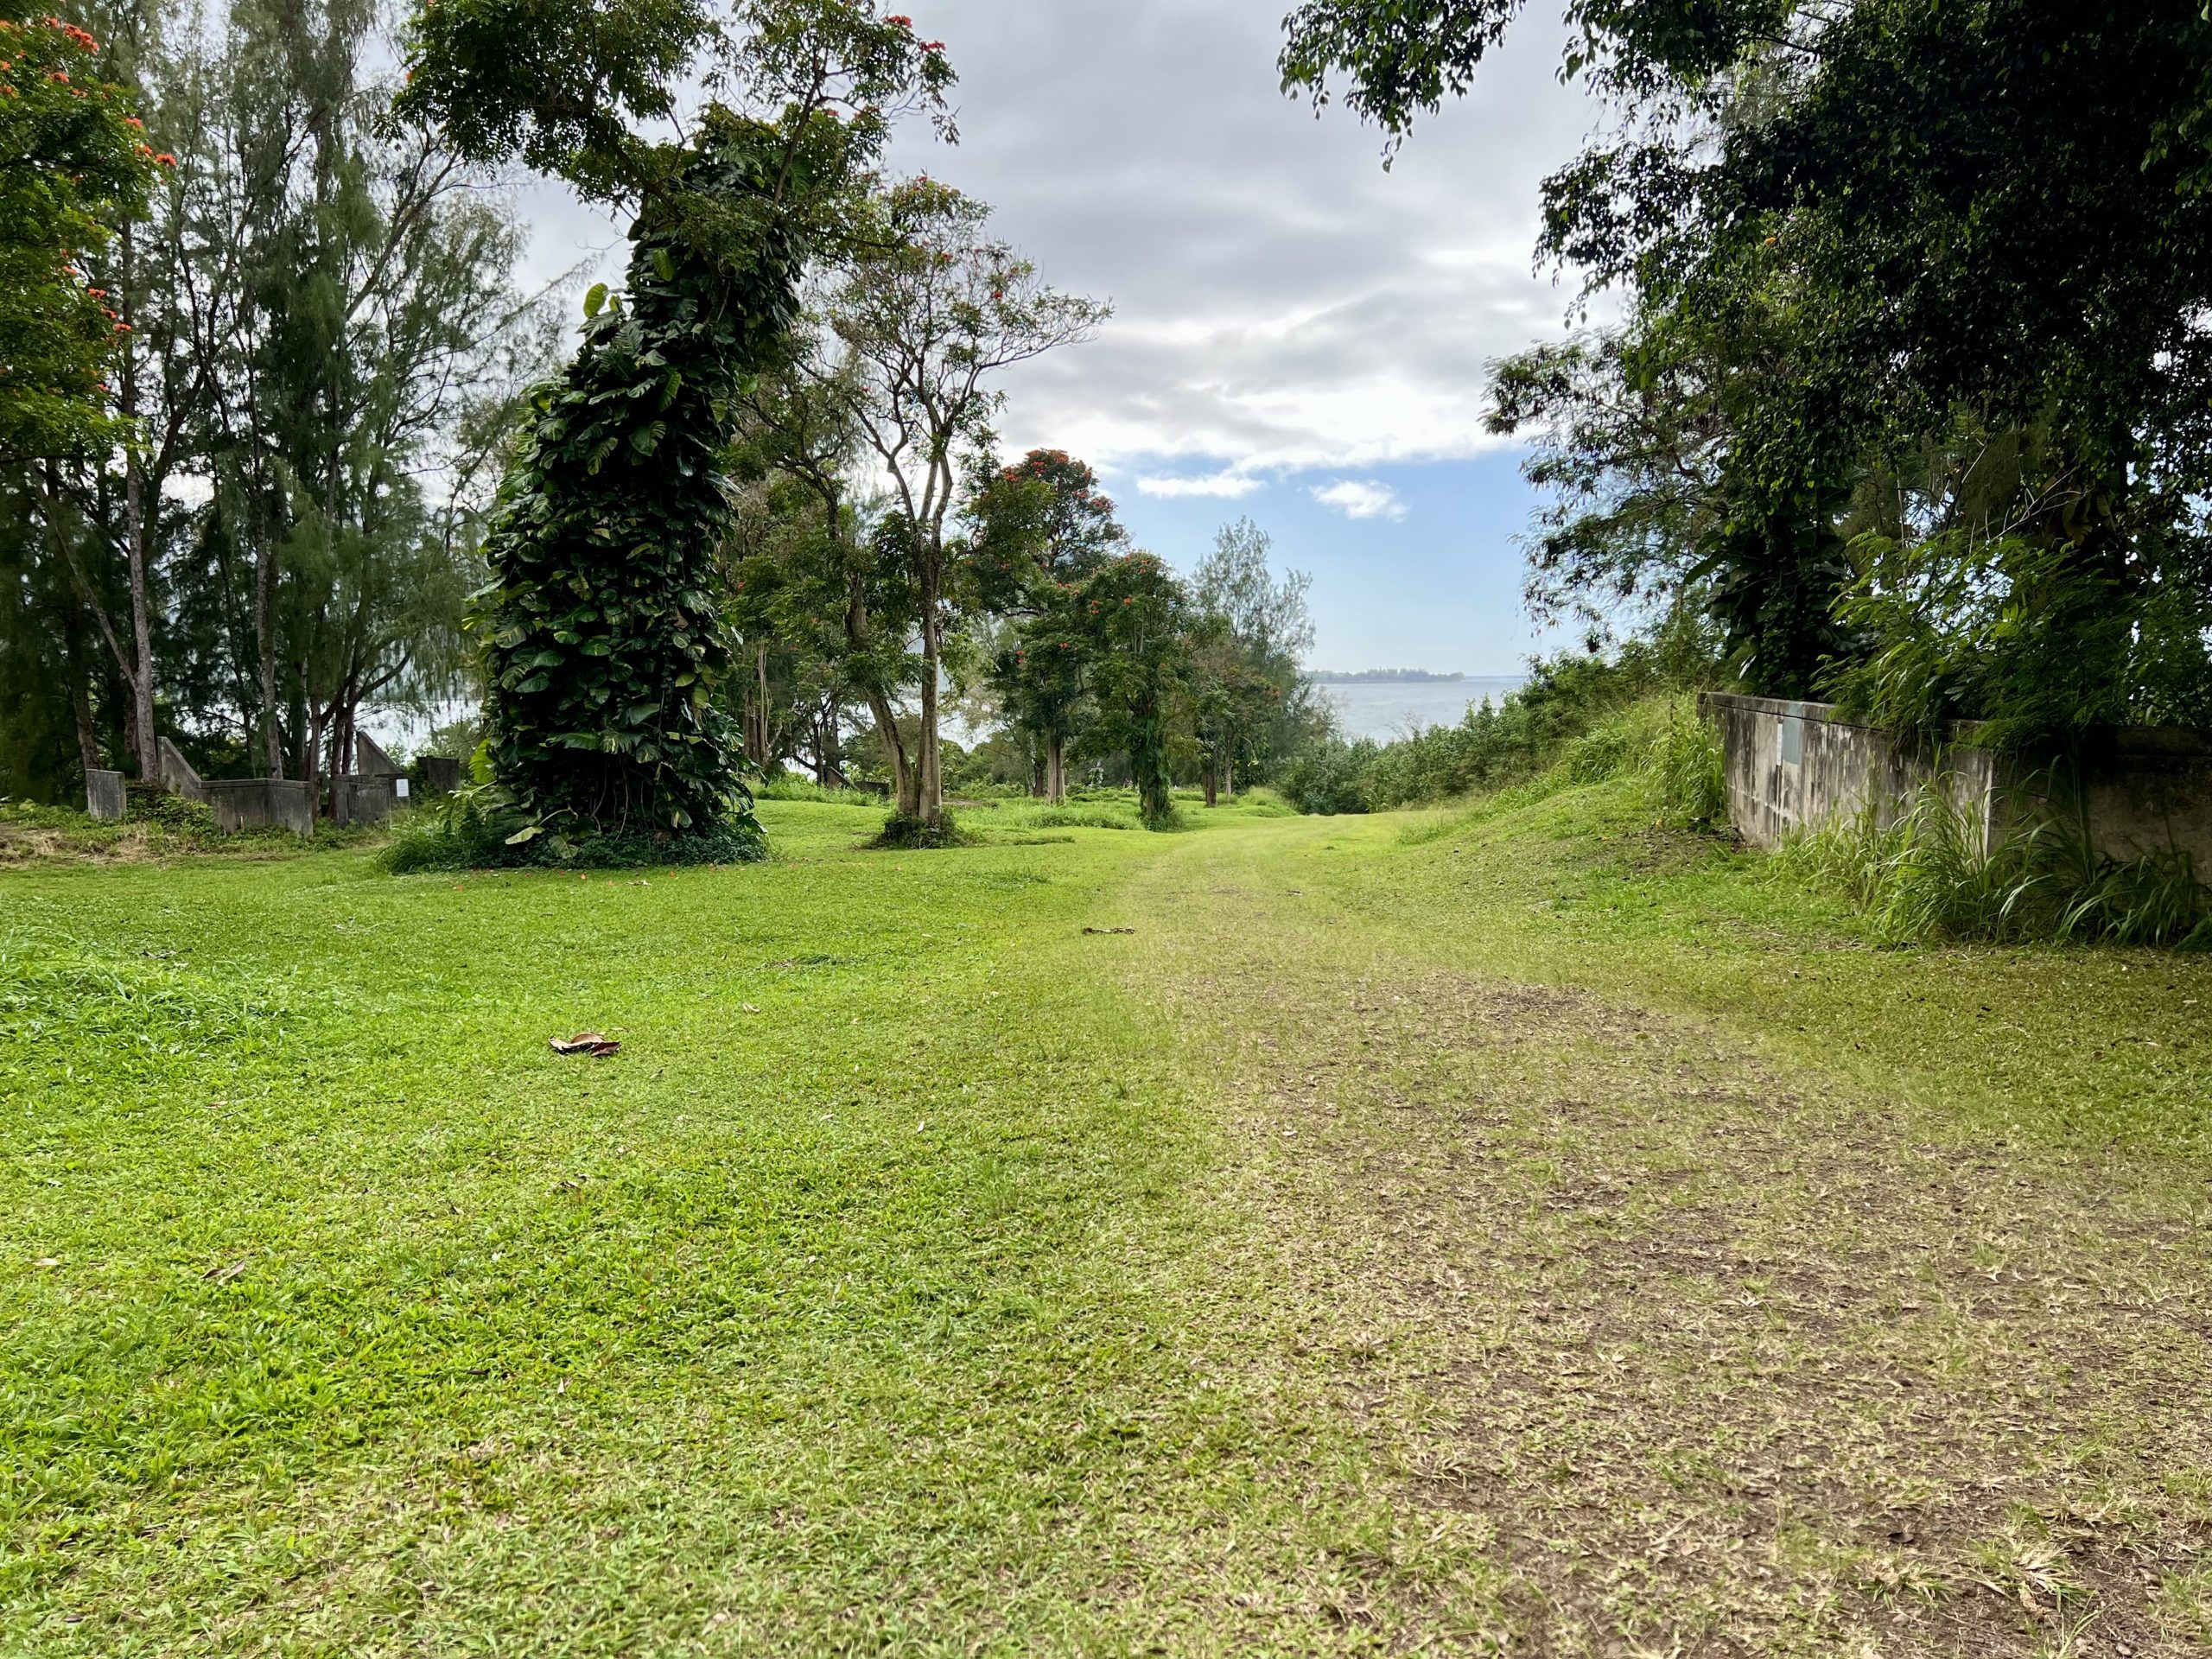 a path through a grassy area